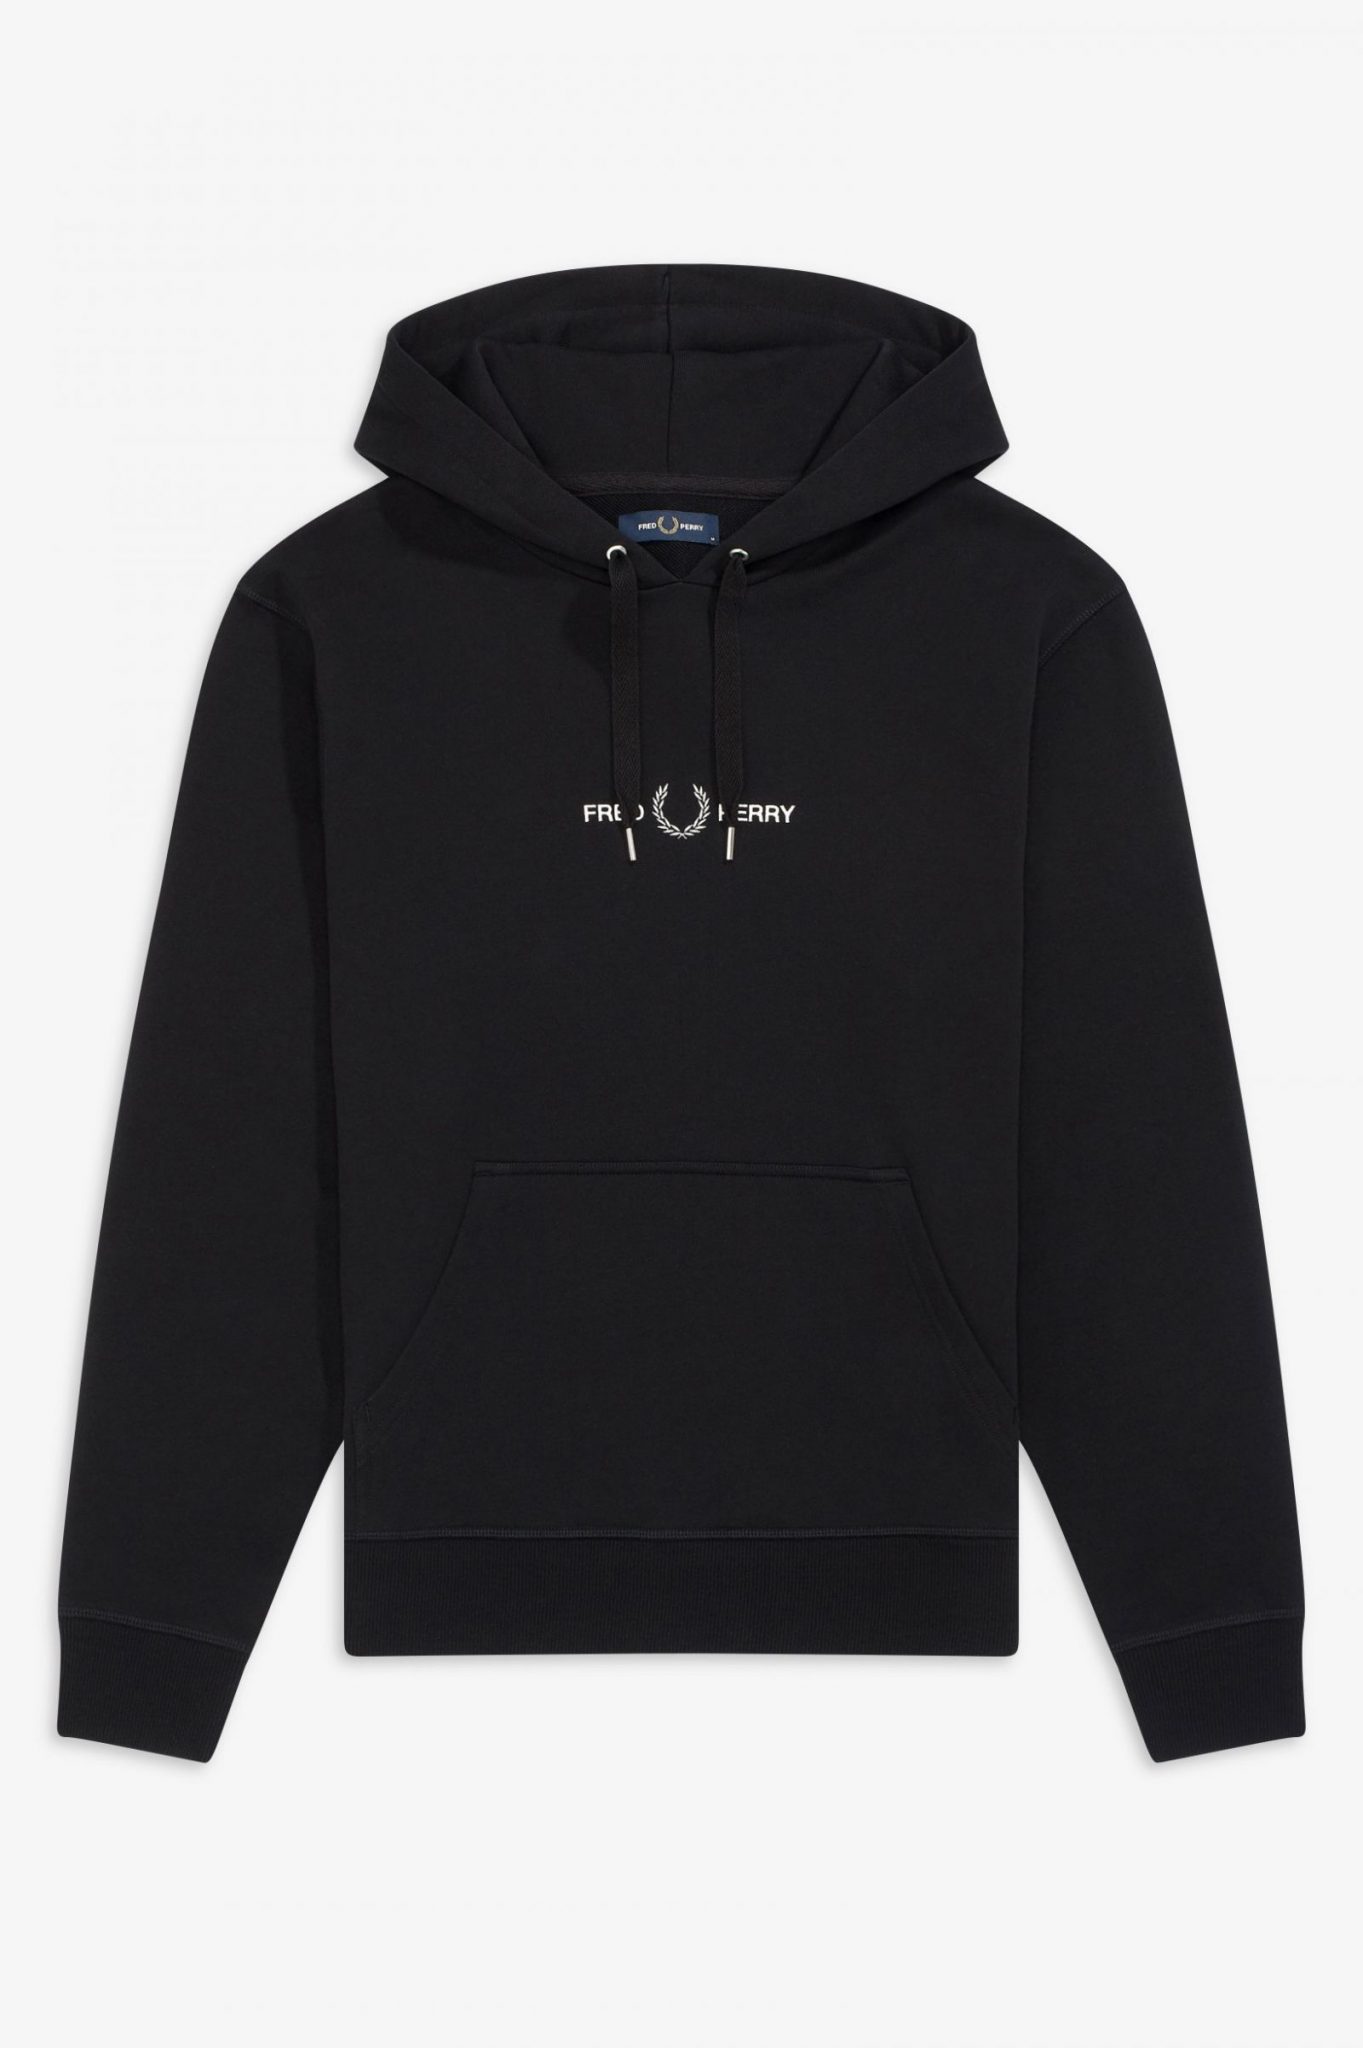 Buy Fred Perry Graphic Hooded Sweatshirt Black - Scandinavian Fashion Store